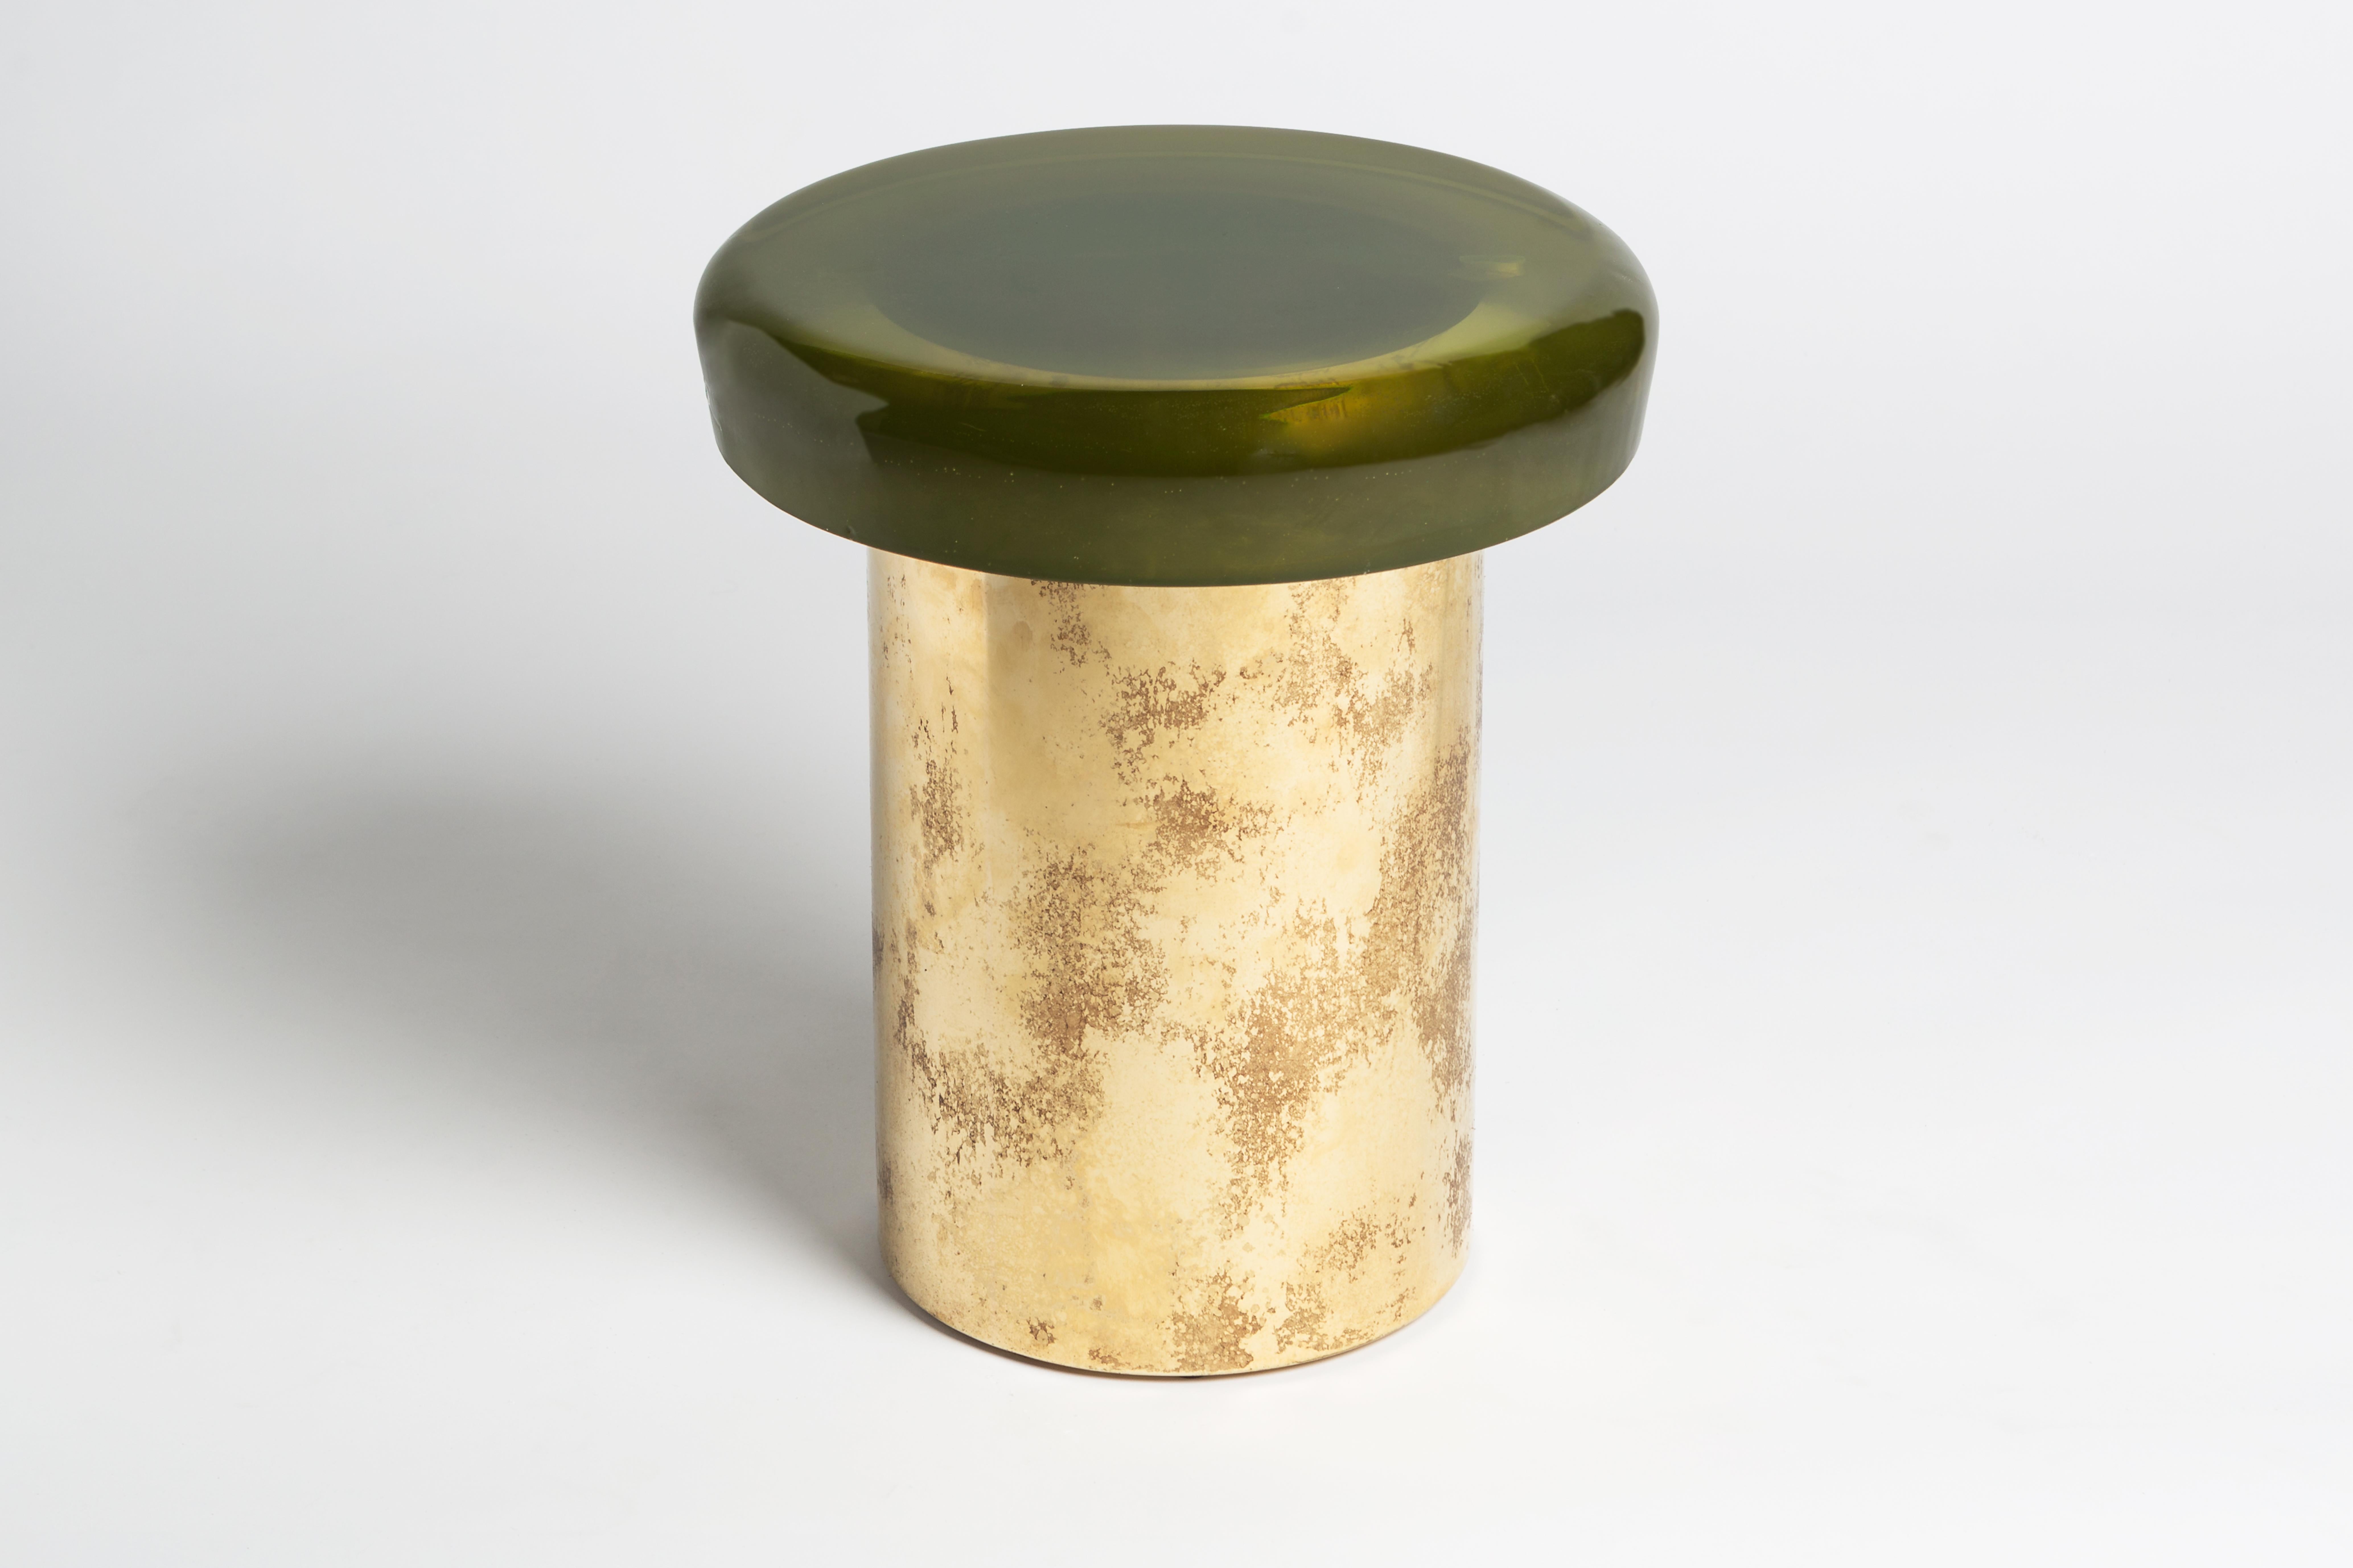 Contemporary Jade Stool by Draga & Aurel For Sale